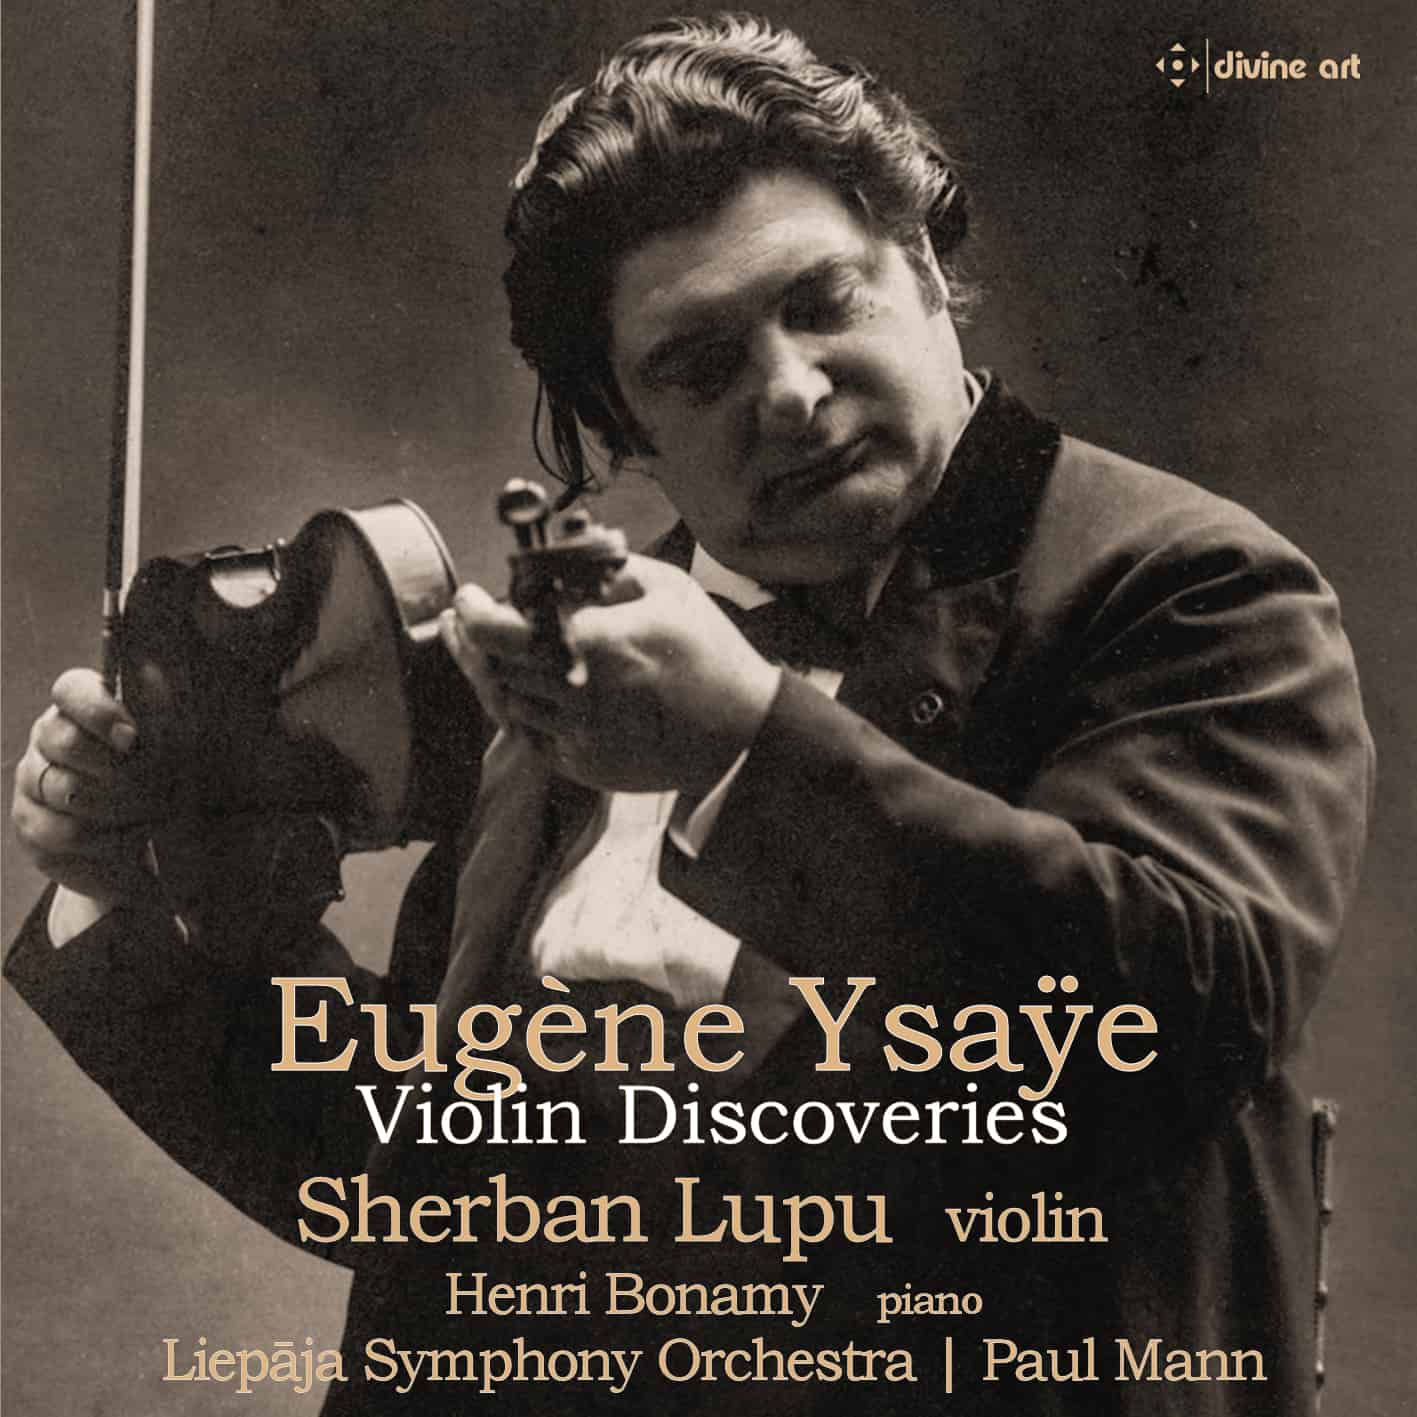 Eugène Ysaÿe – Violin Discoveries